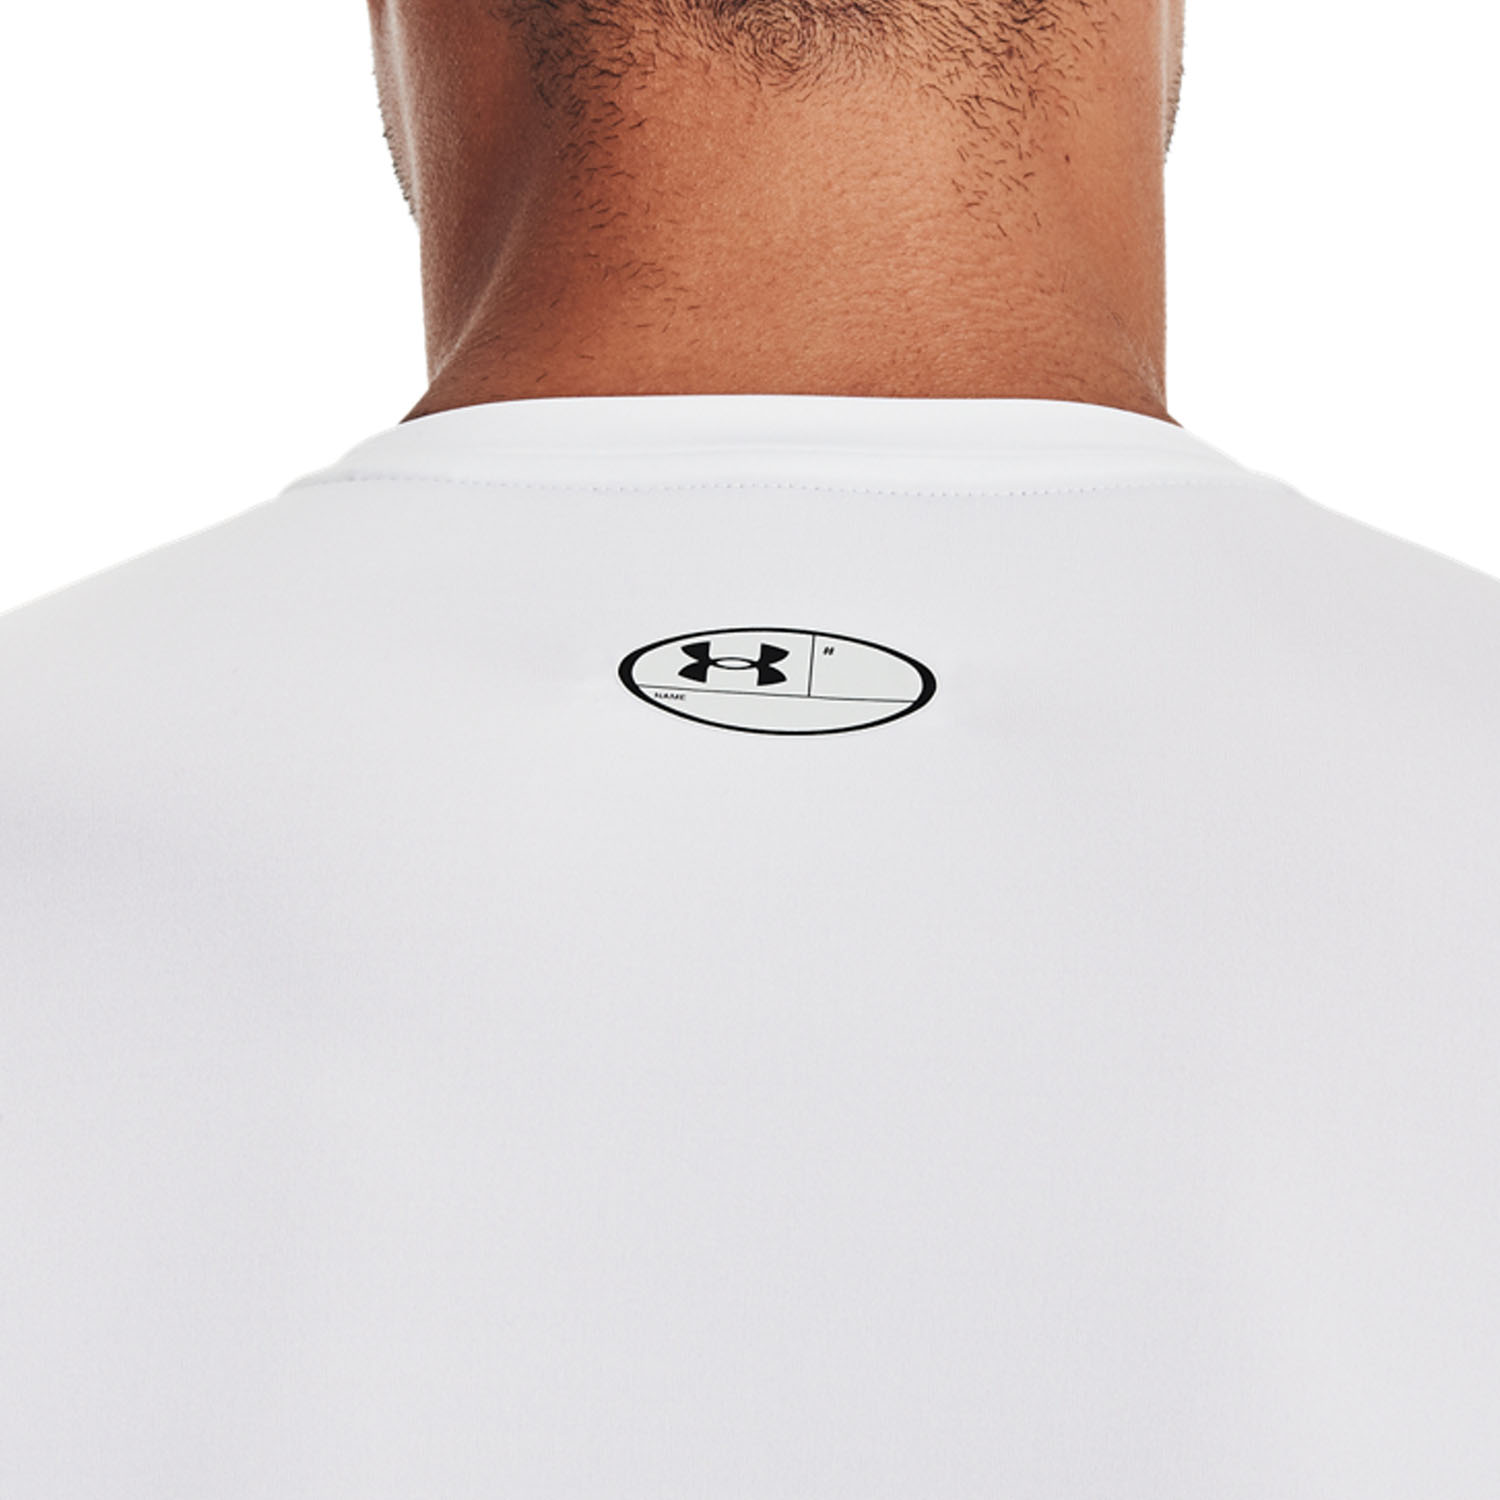 Under Armour HeatGear Compression Shirt - White/Black